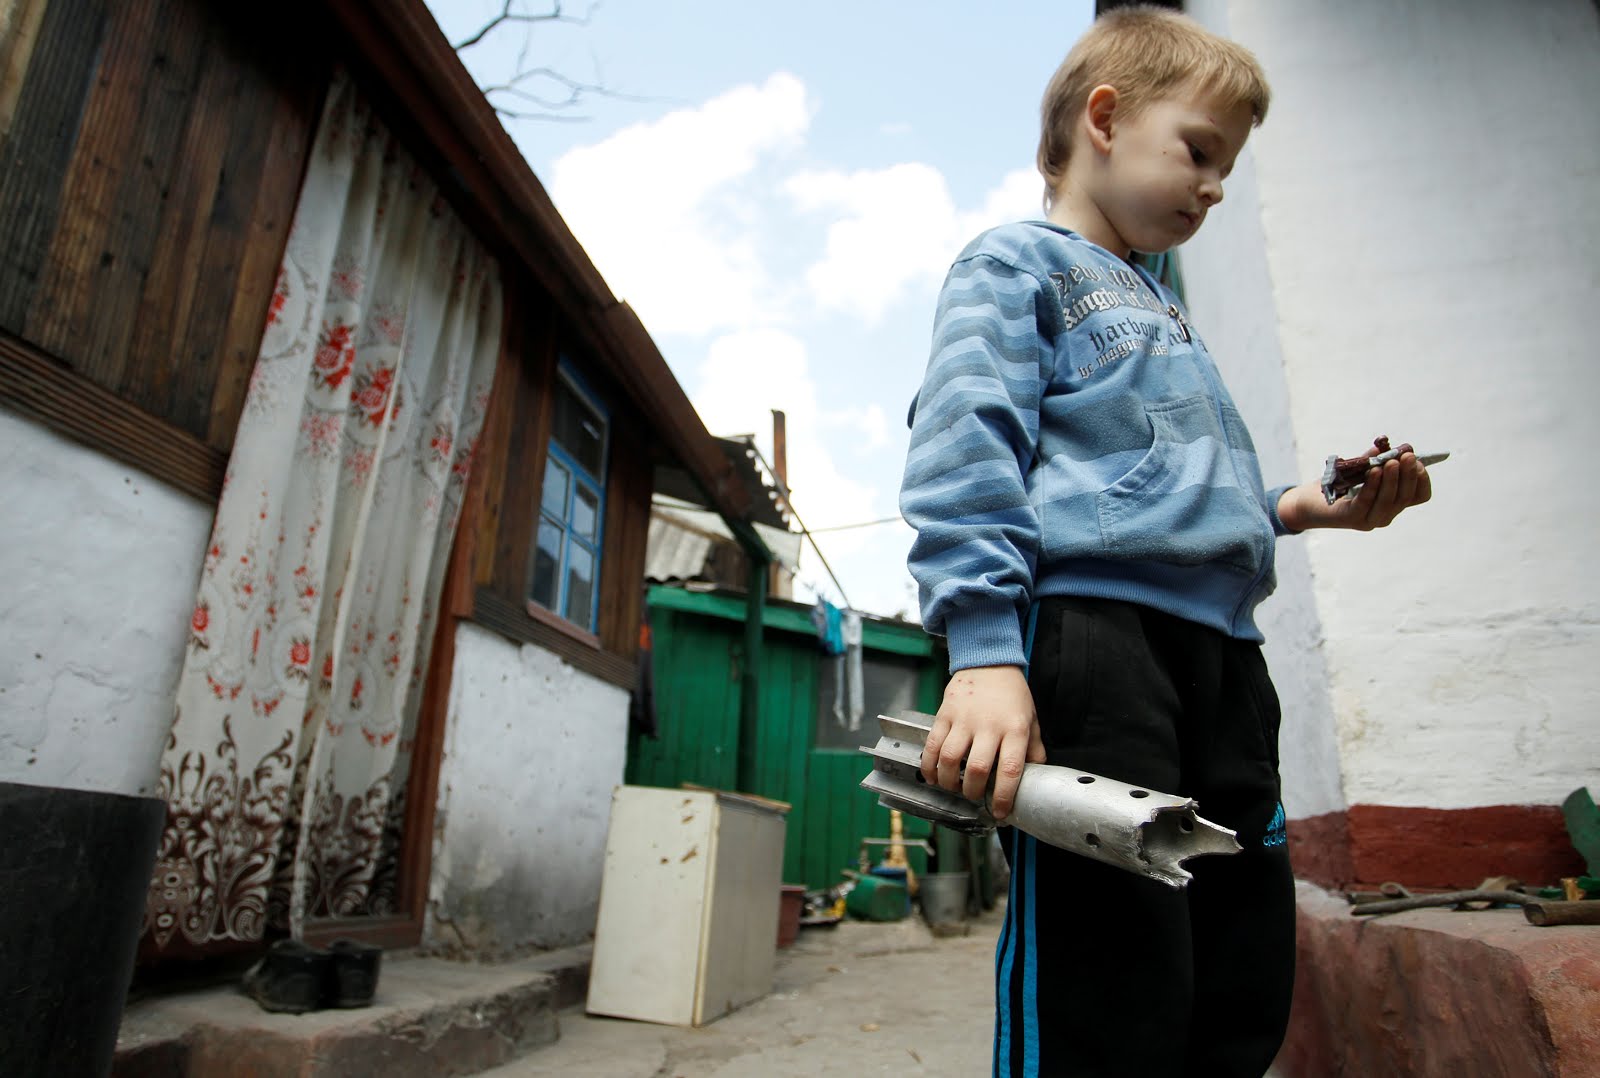 School children are targets in the war in Eastern Ukraine